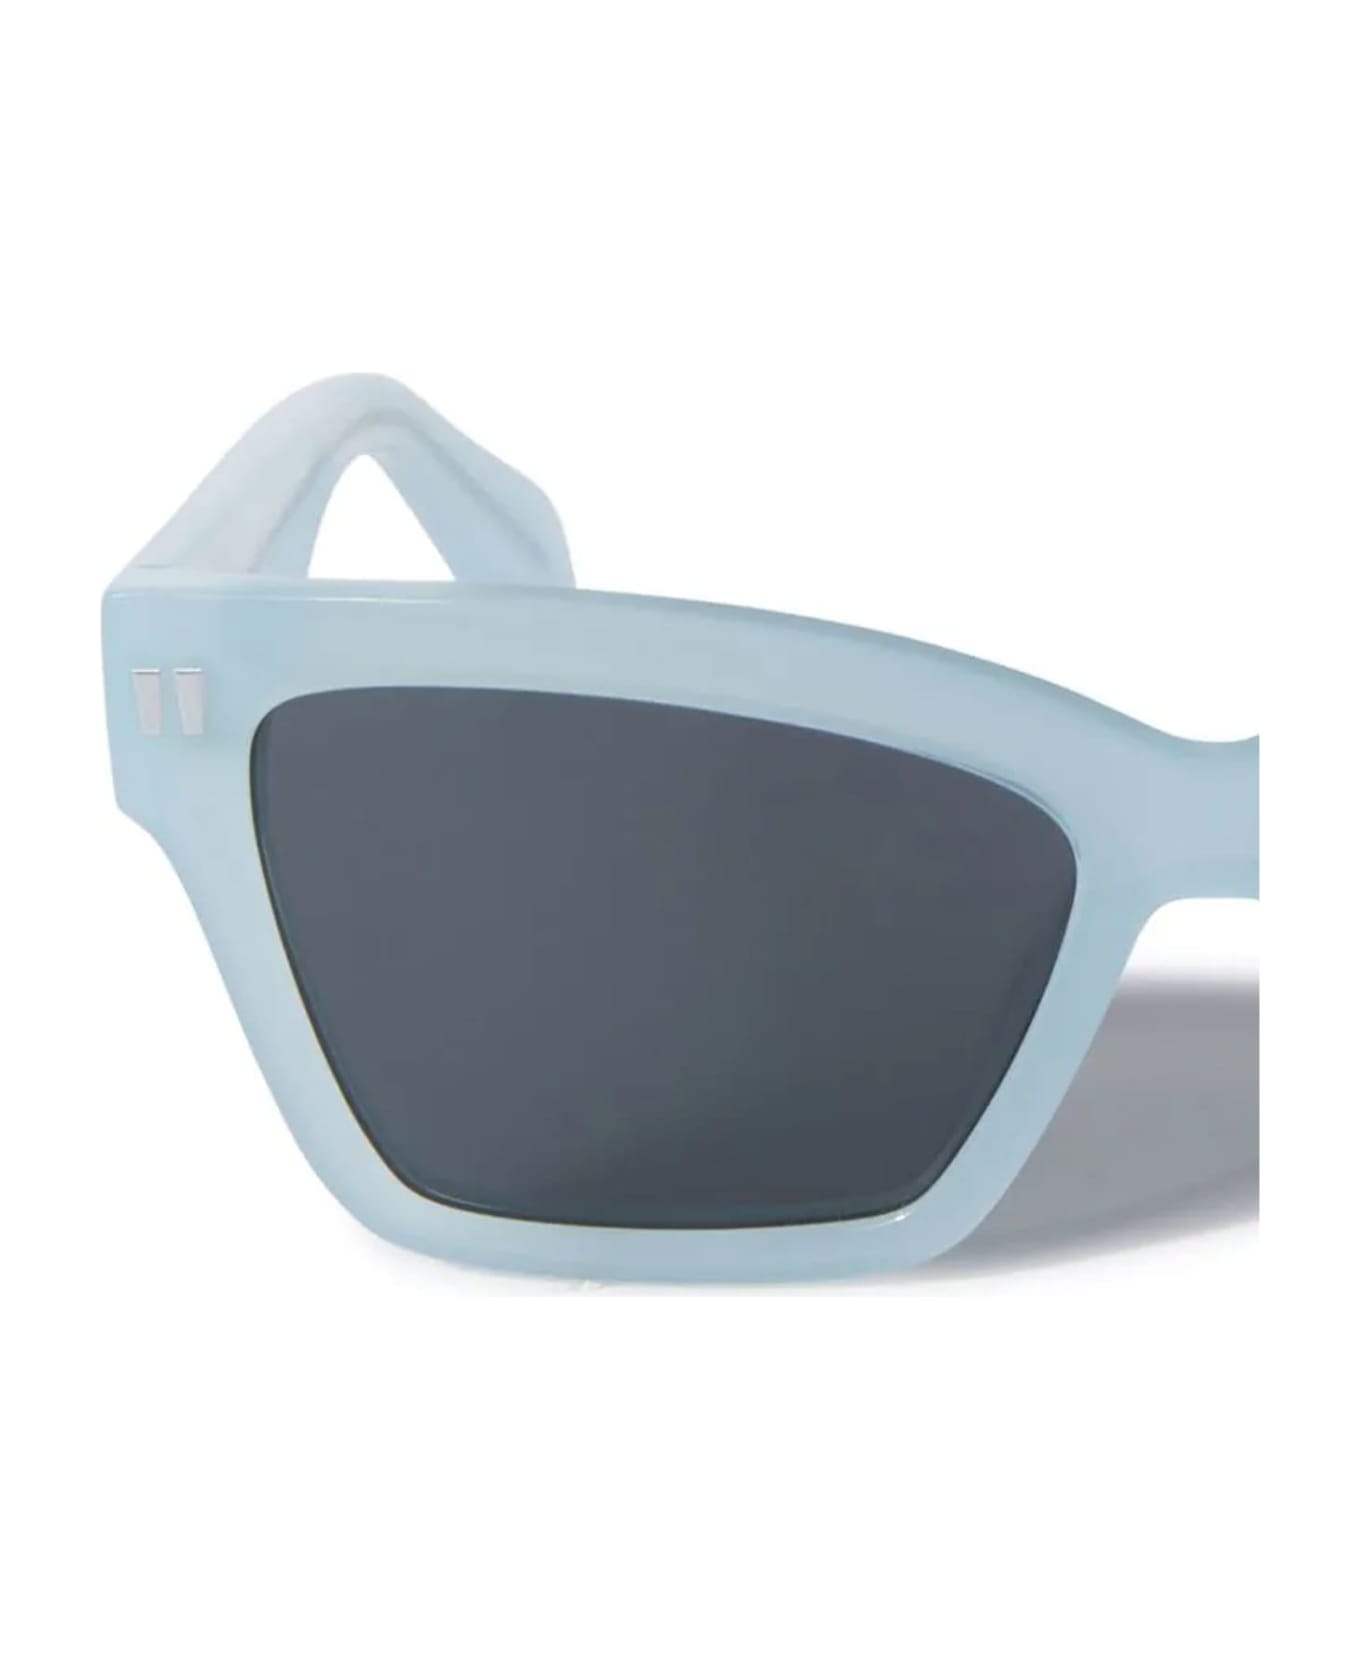 Off-White Cincinnati - Light Blue / Dark Grey Sunglasses - blue